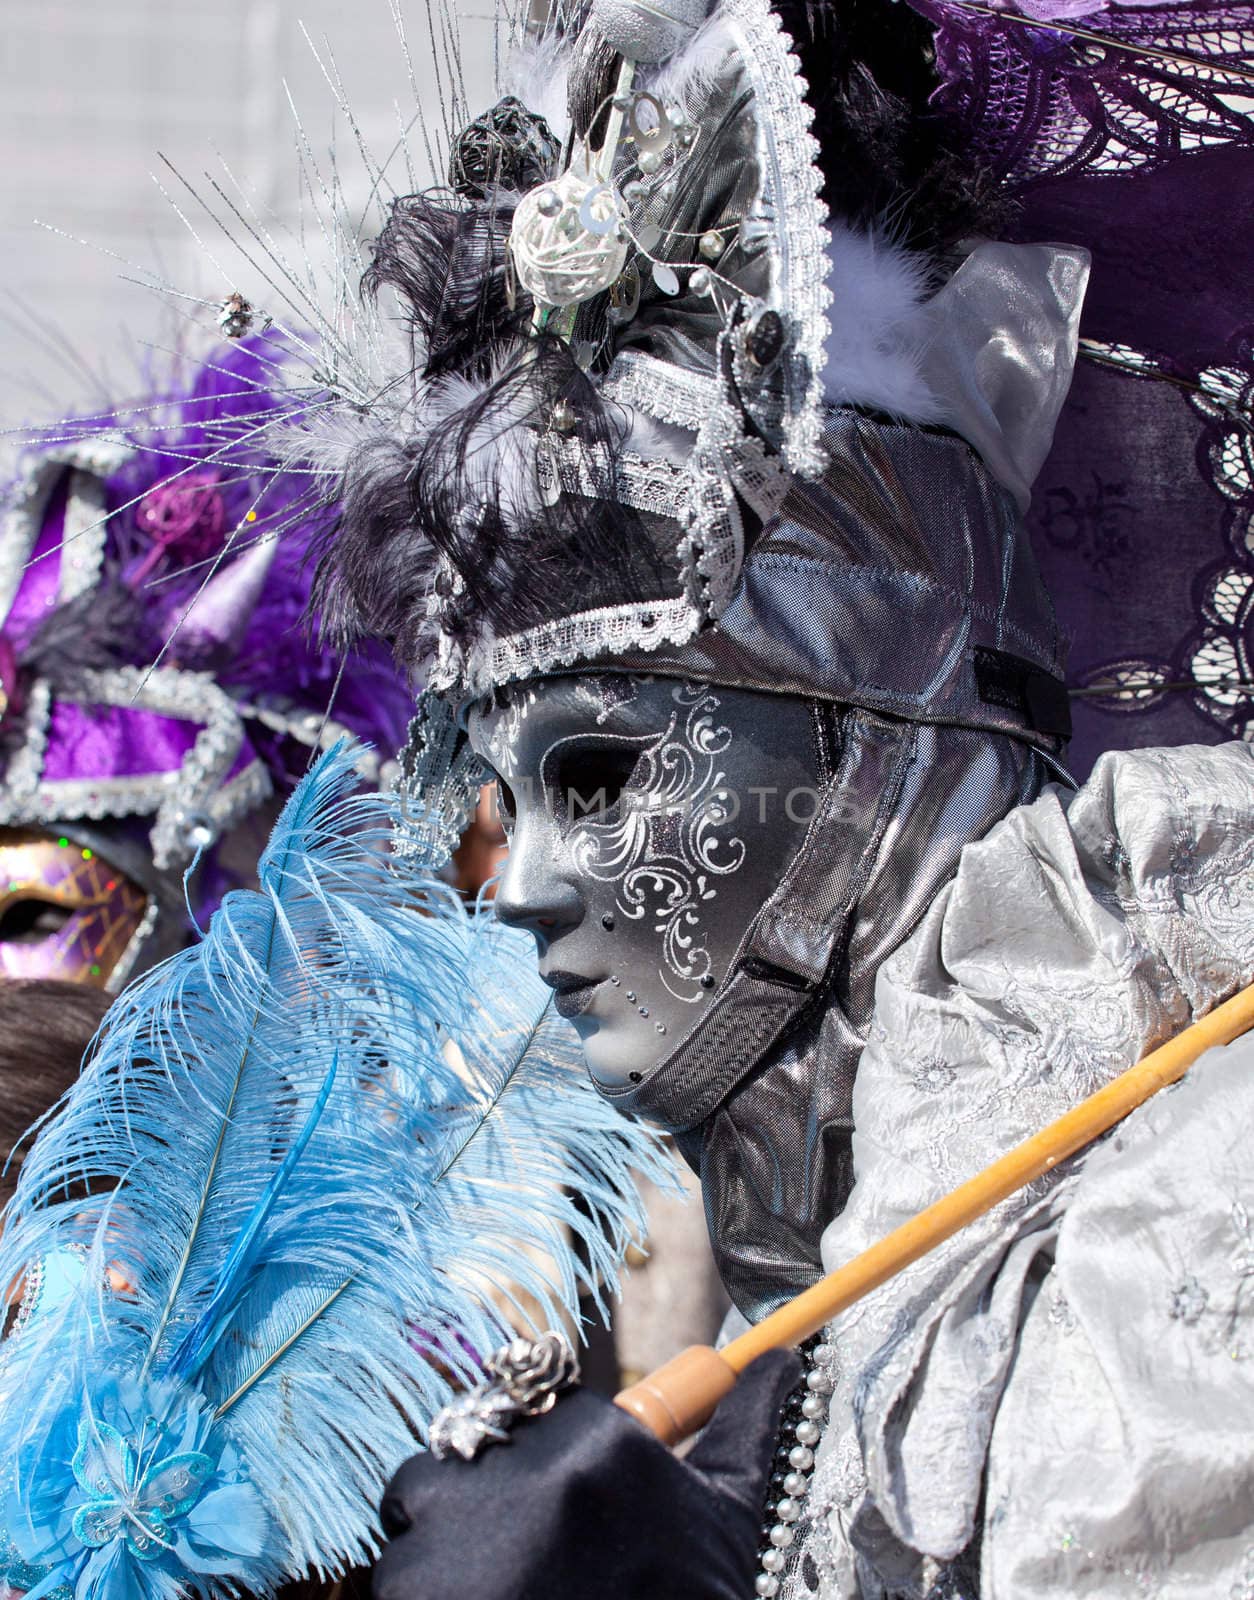 Venice carnival by bepsimage